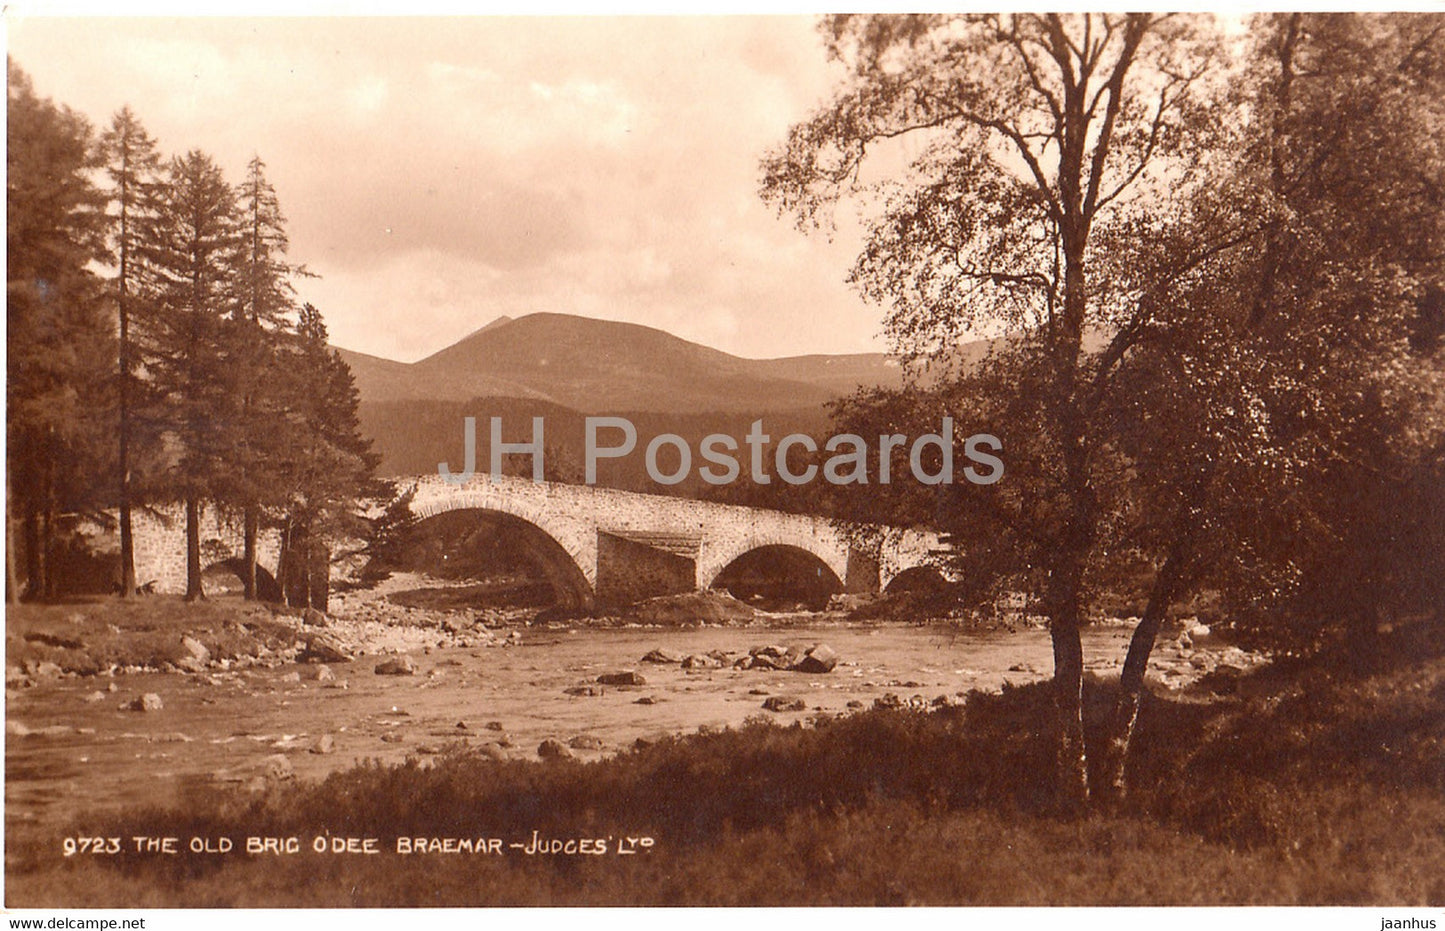 The Old Brig O'Dee Braemar - 9723 - old postcard - Scotland - United Kingdom - unused - JH Postcards